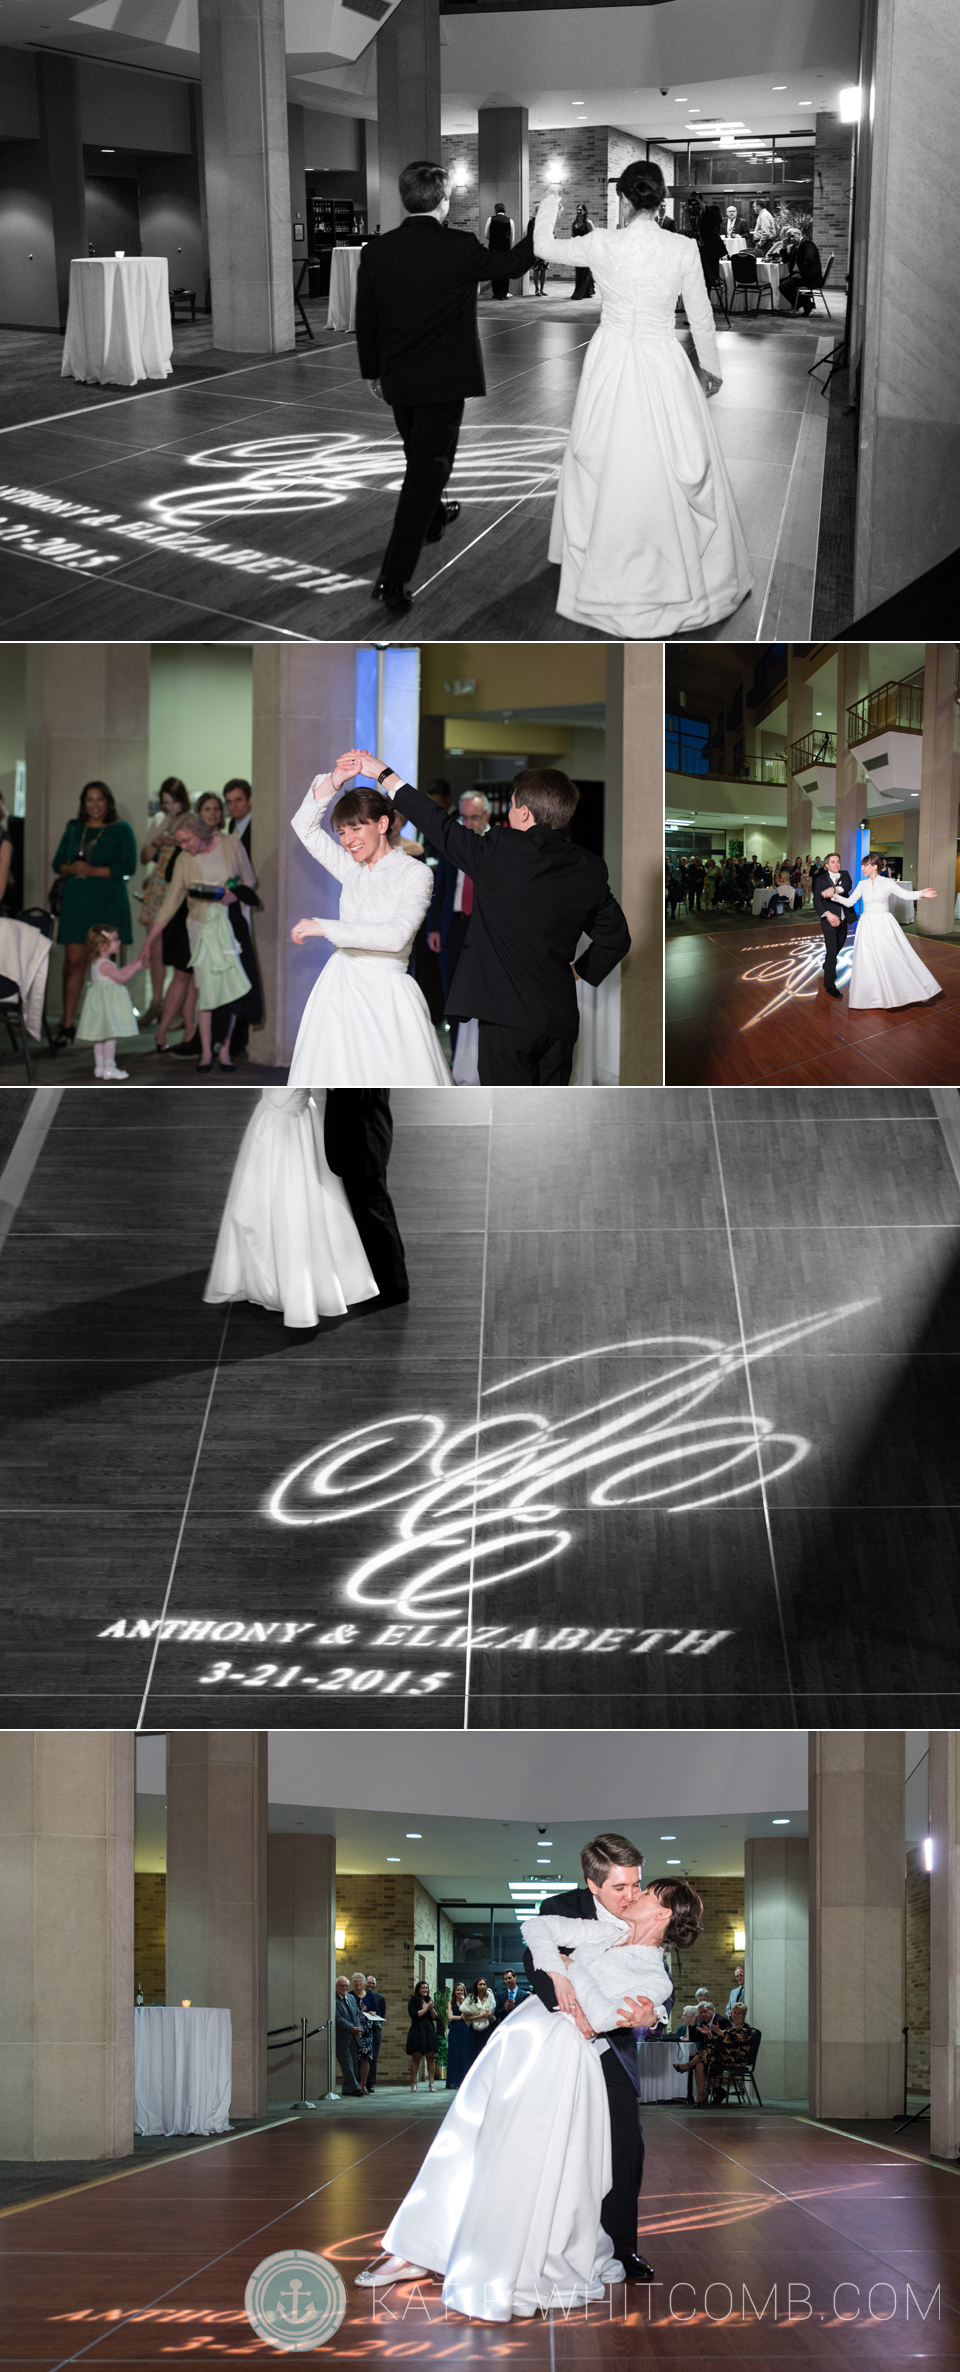 Bride & Groom's first dance at their wedding reception after a Notre Dame Basilica wedding at McKenna Hall